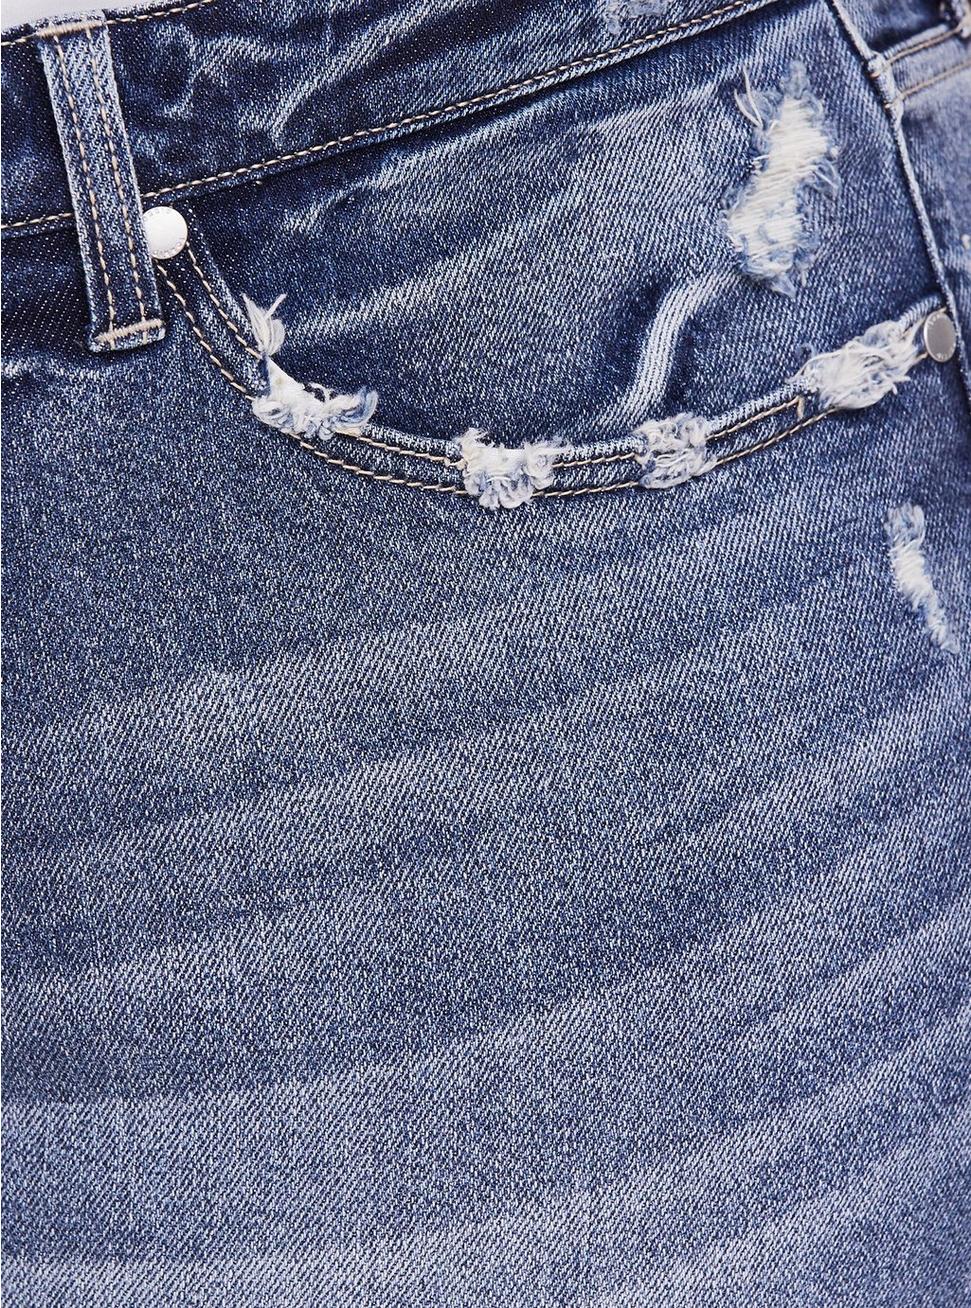 Plus Size - High Rise Straight Jean - Vintage Stretch Light Wash - Torrid